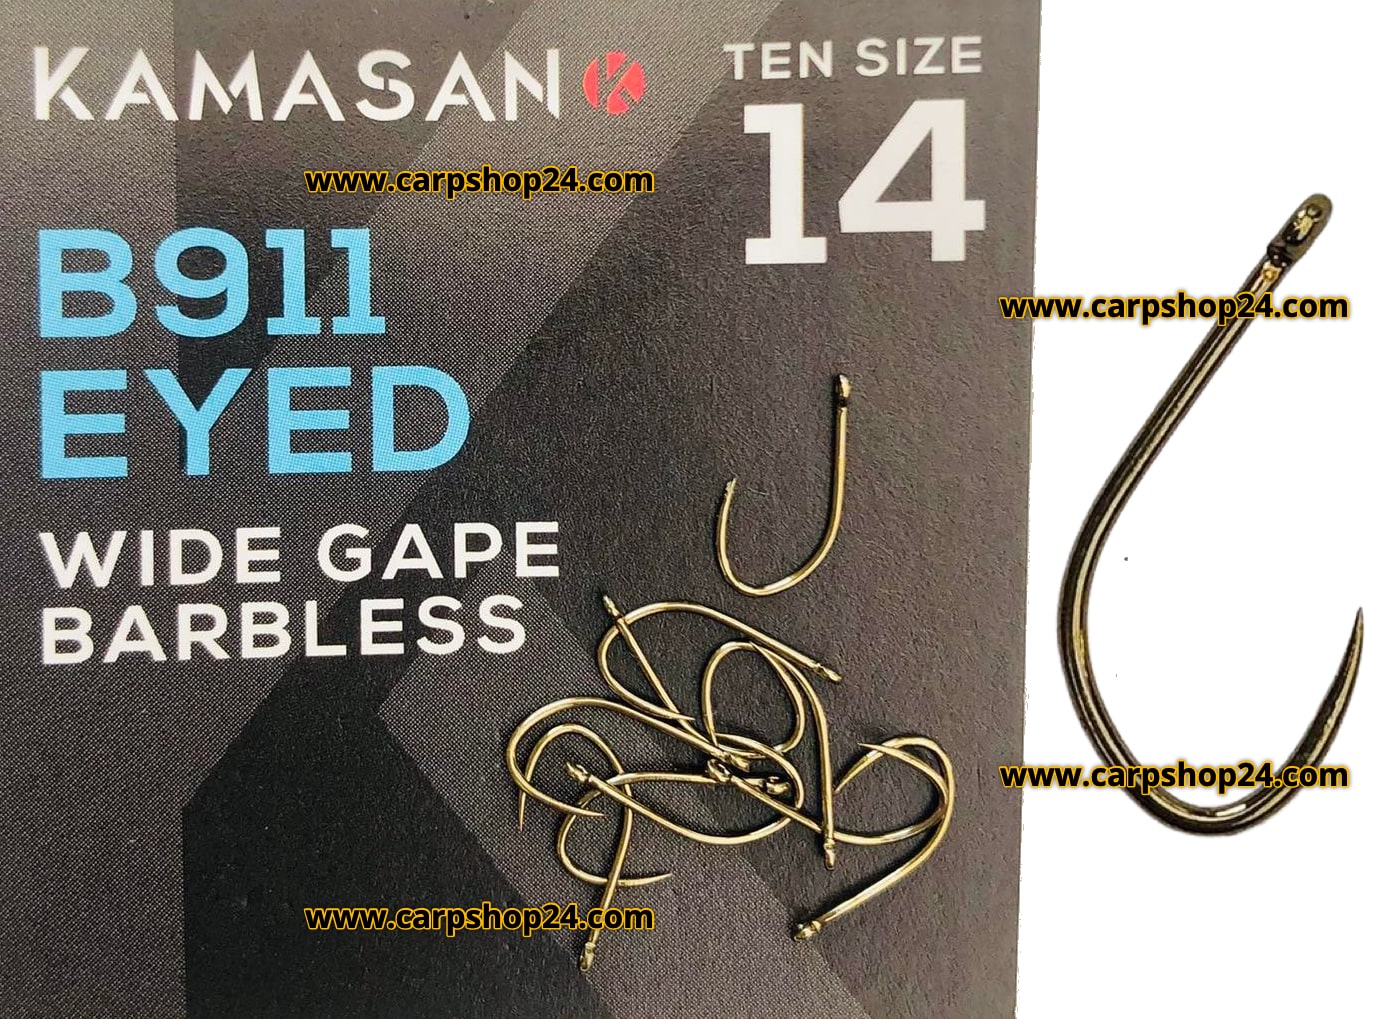 kamasan B911 eyed wide gape barbless size 14